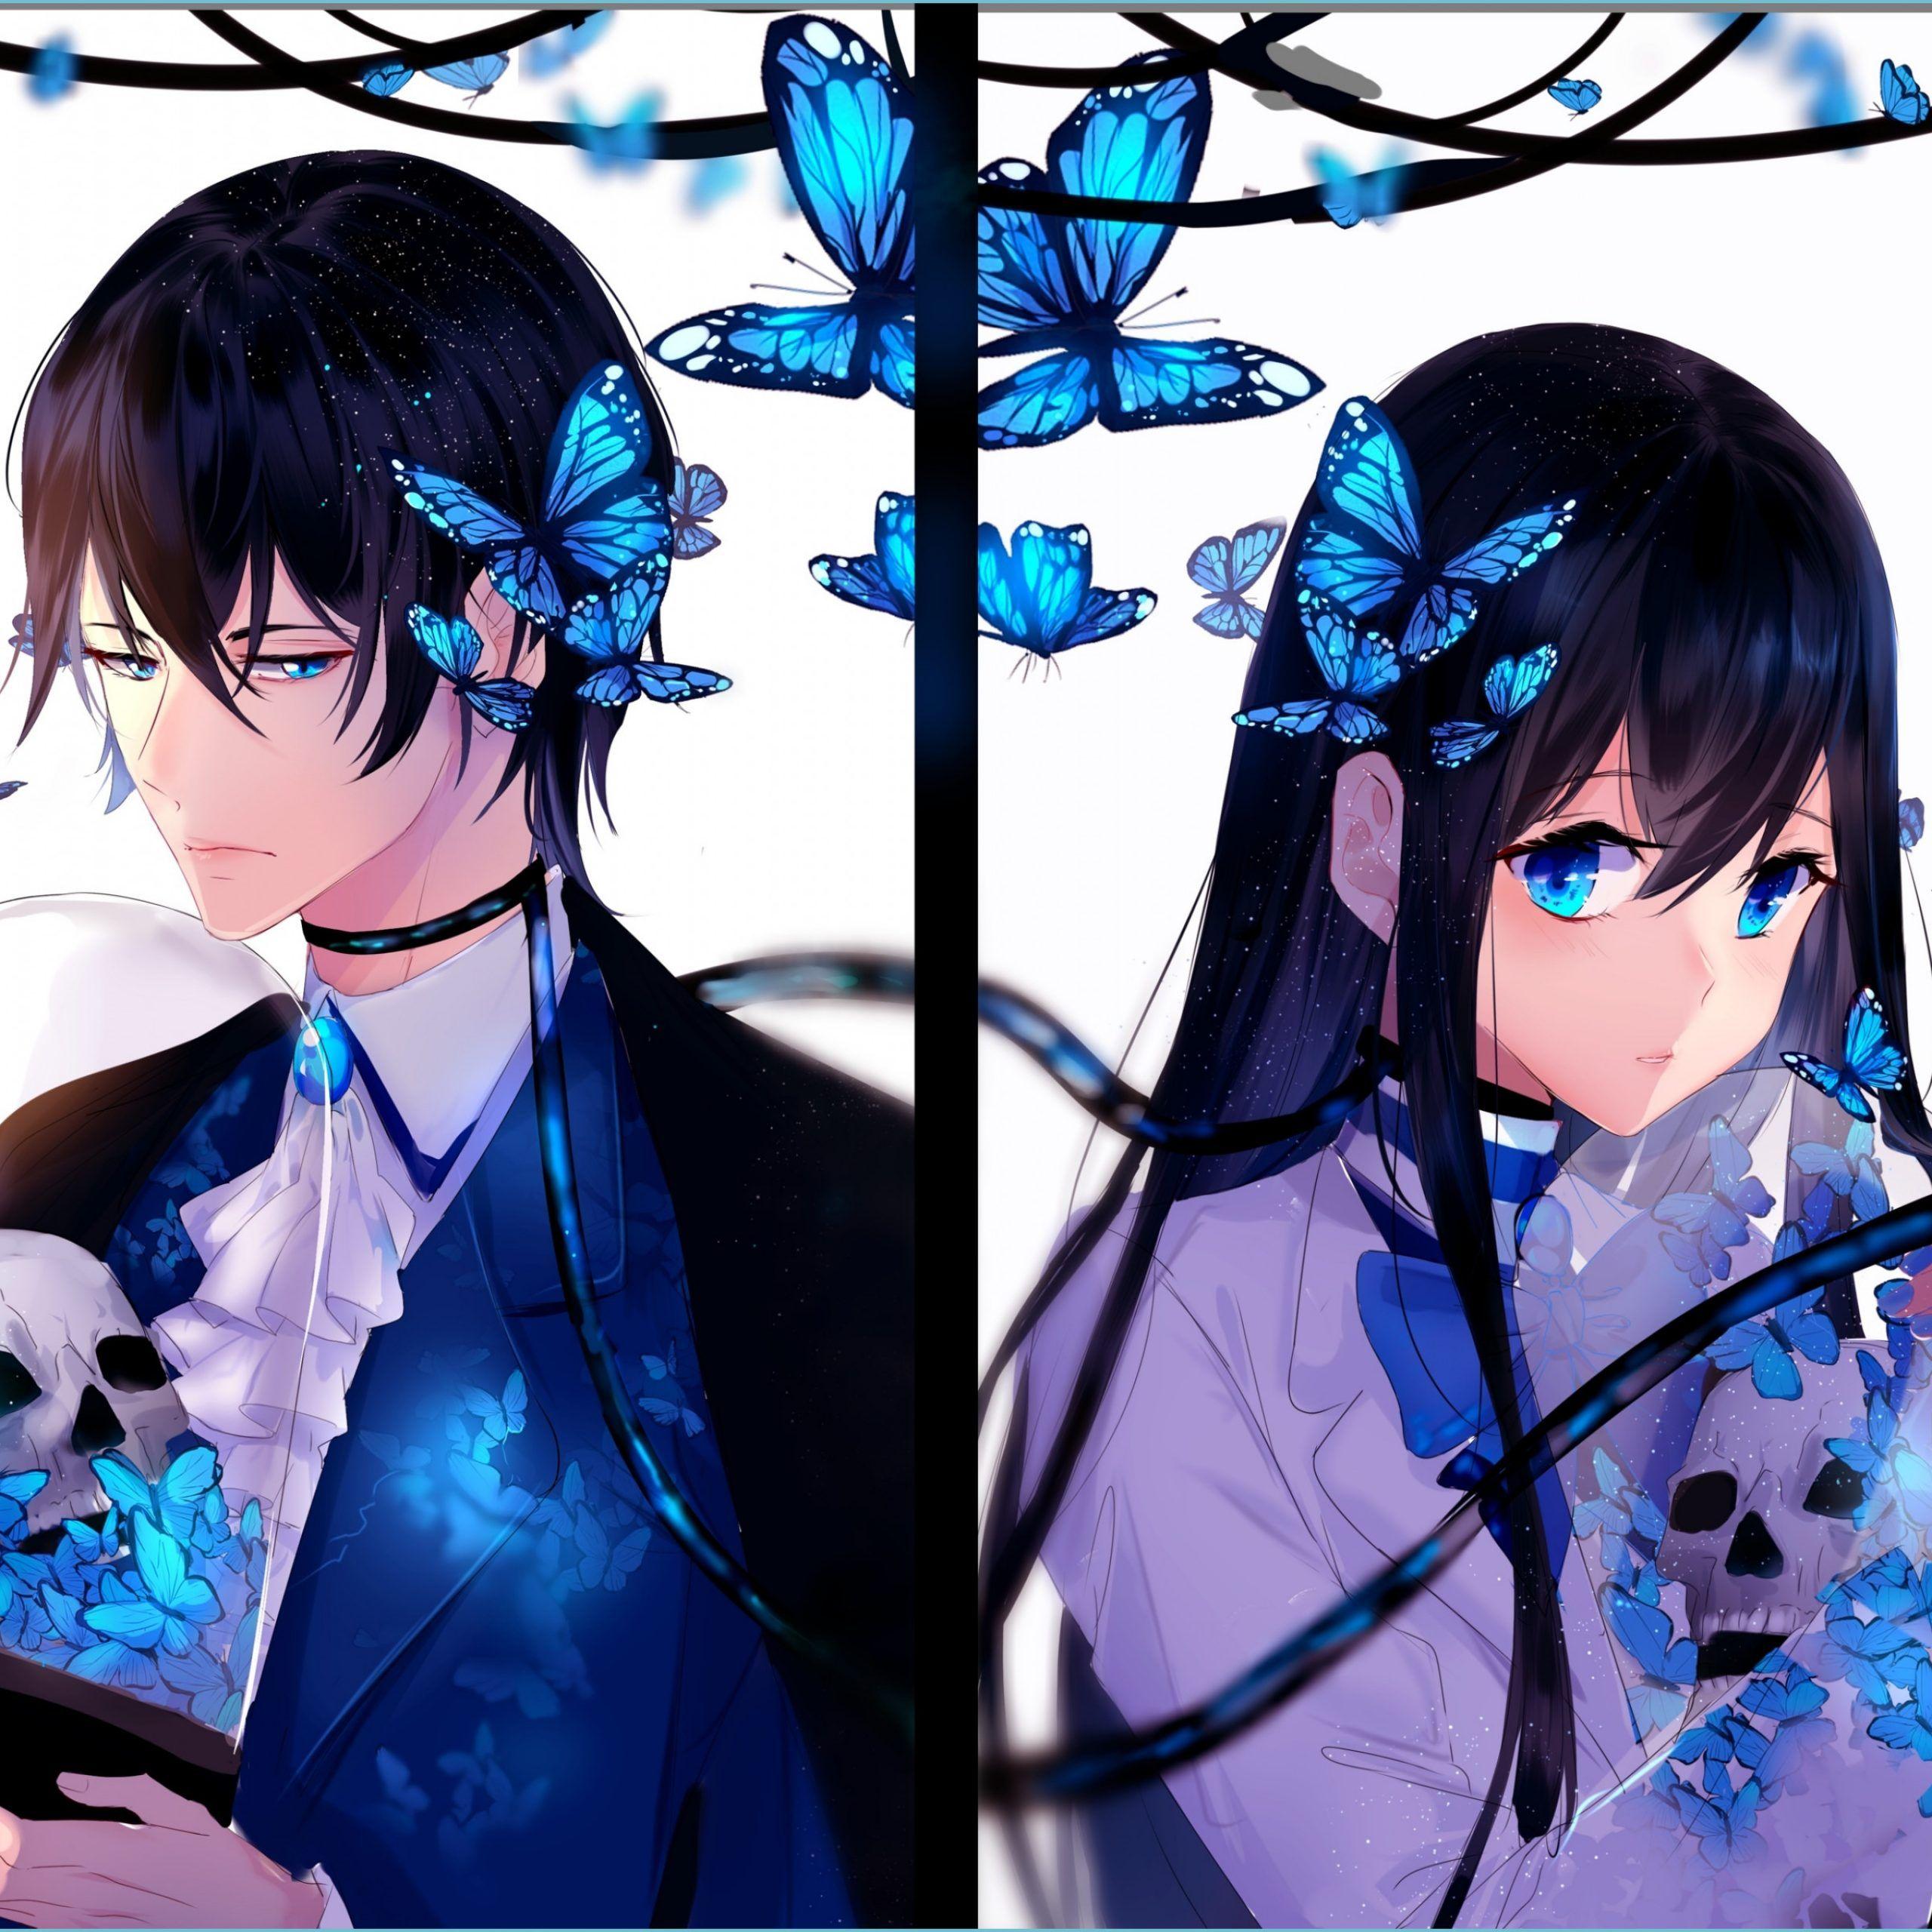 Sweet Anime Couple Wallpapers - Top Free Sweet Anime Couple Backgrounds ...